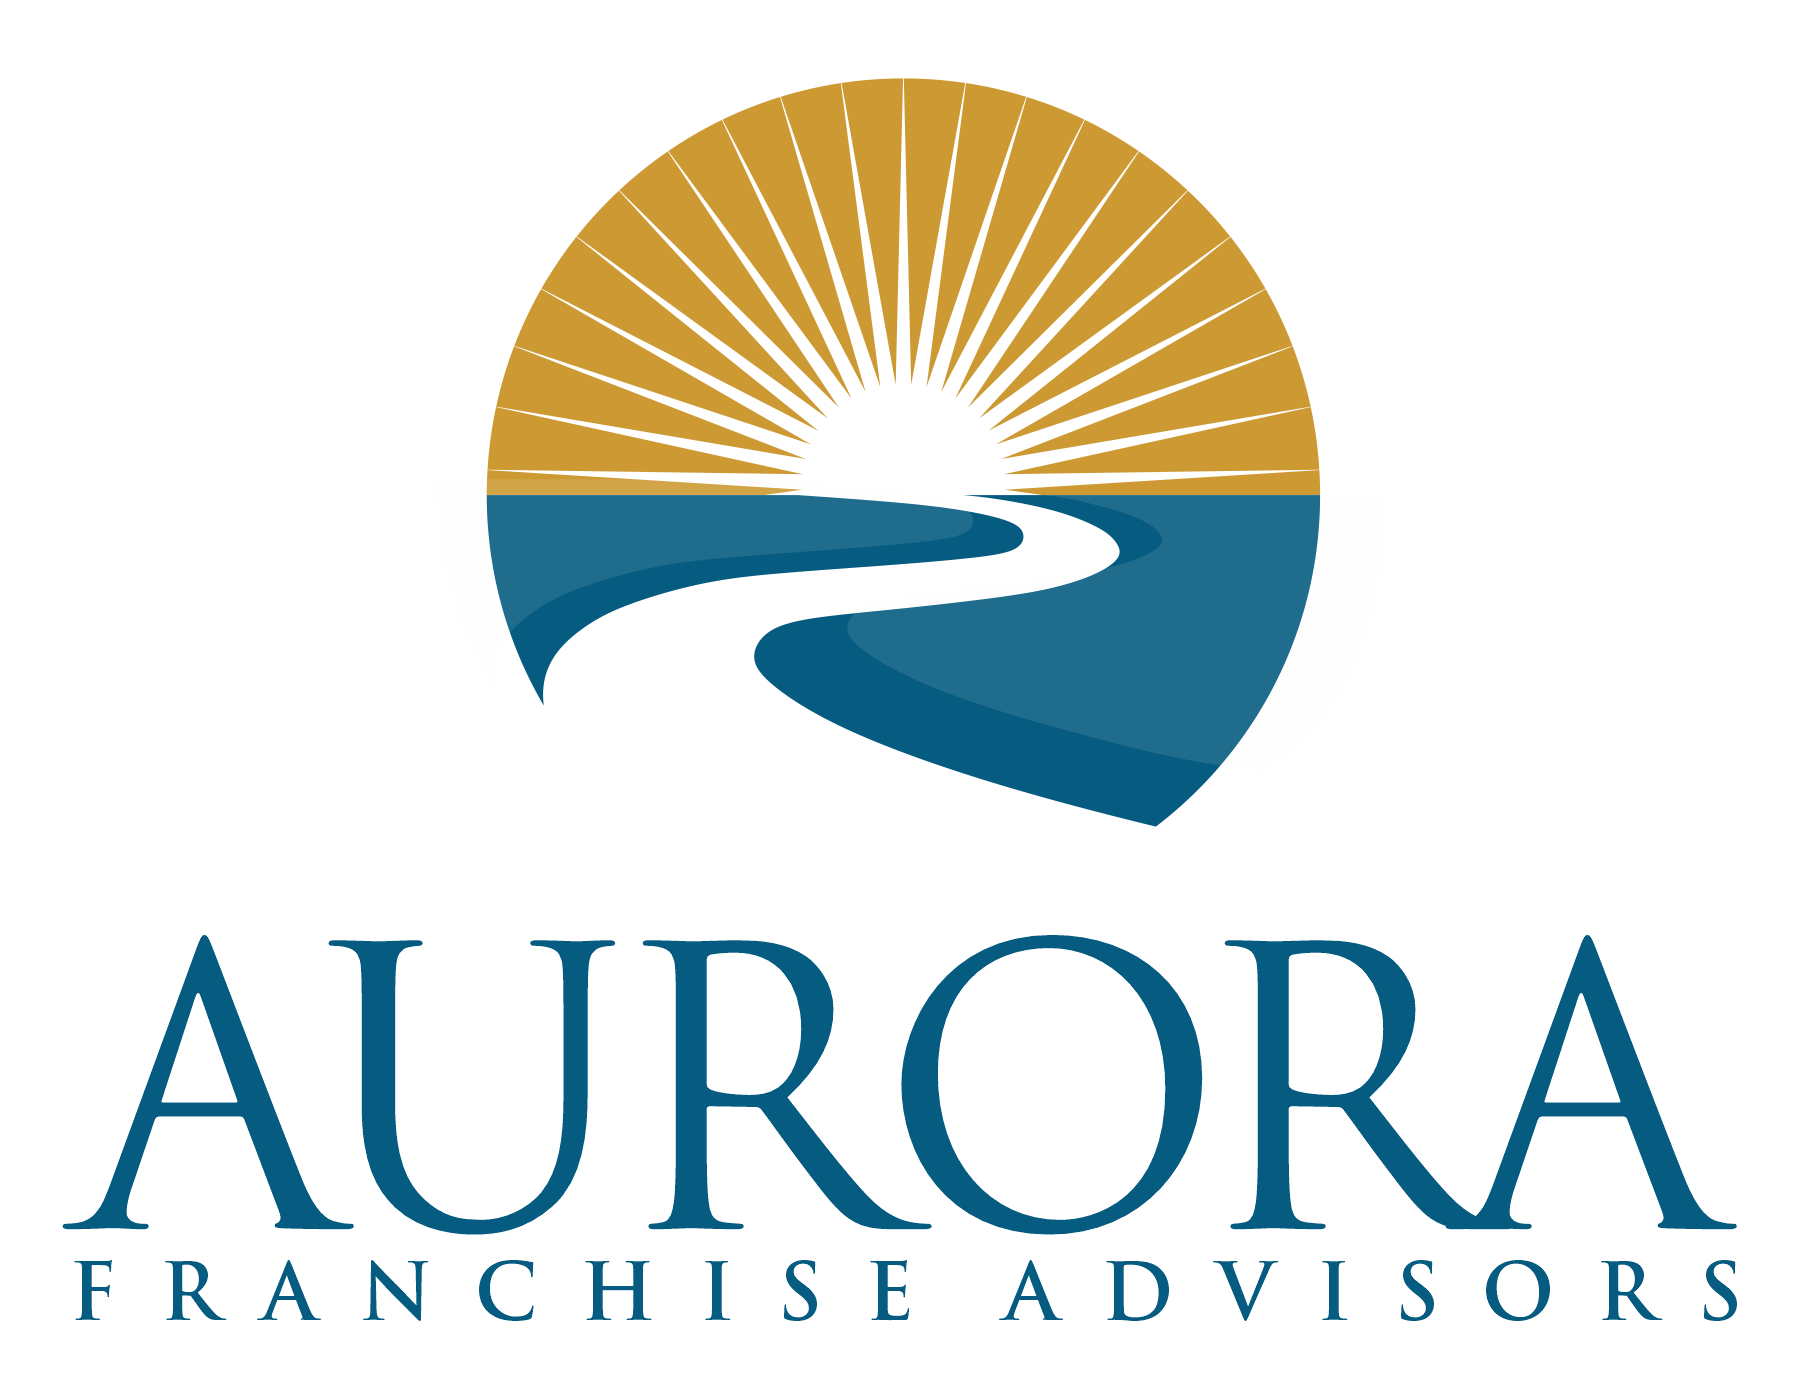 Aurora Franchise Advisors Logo